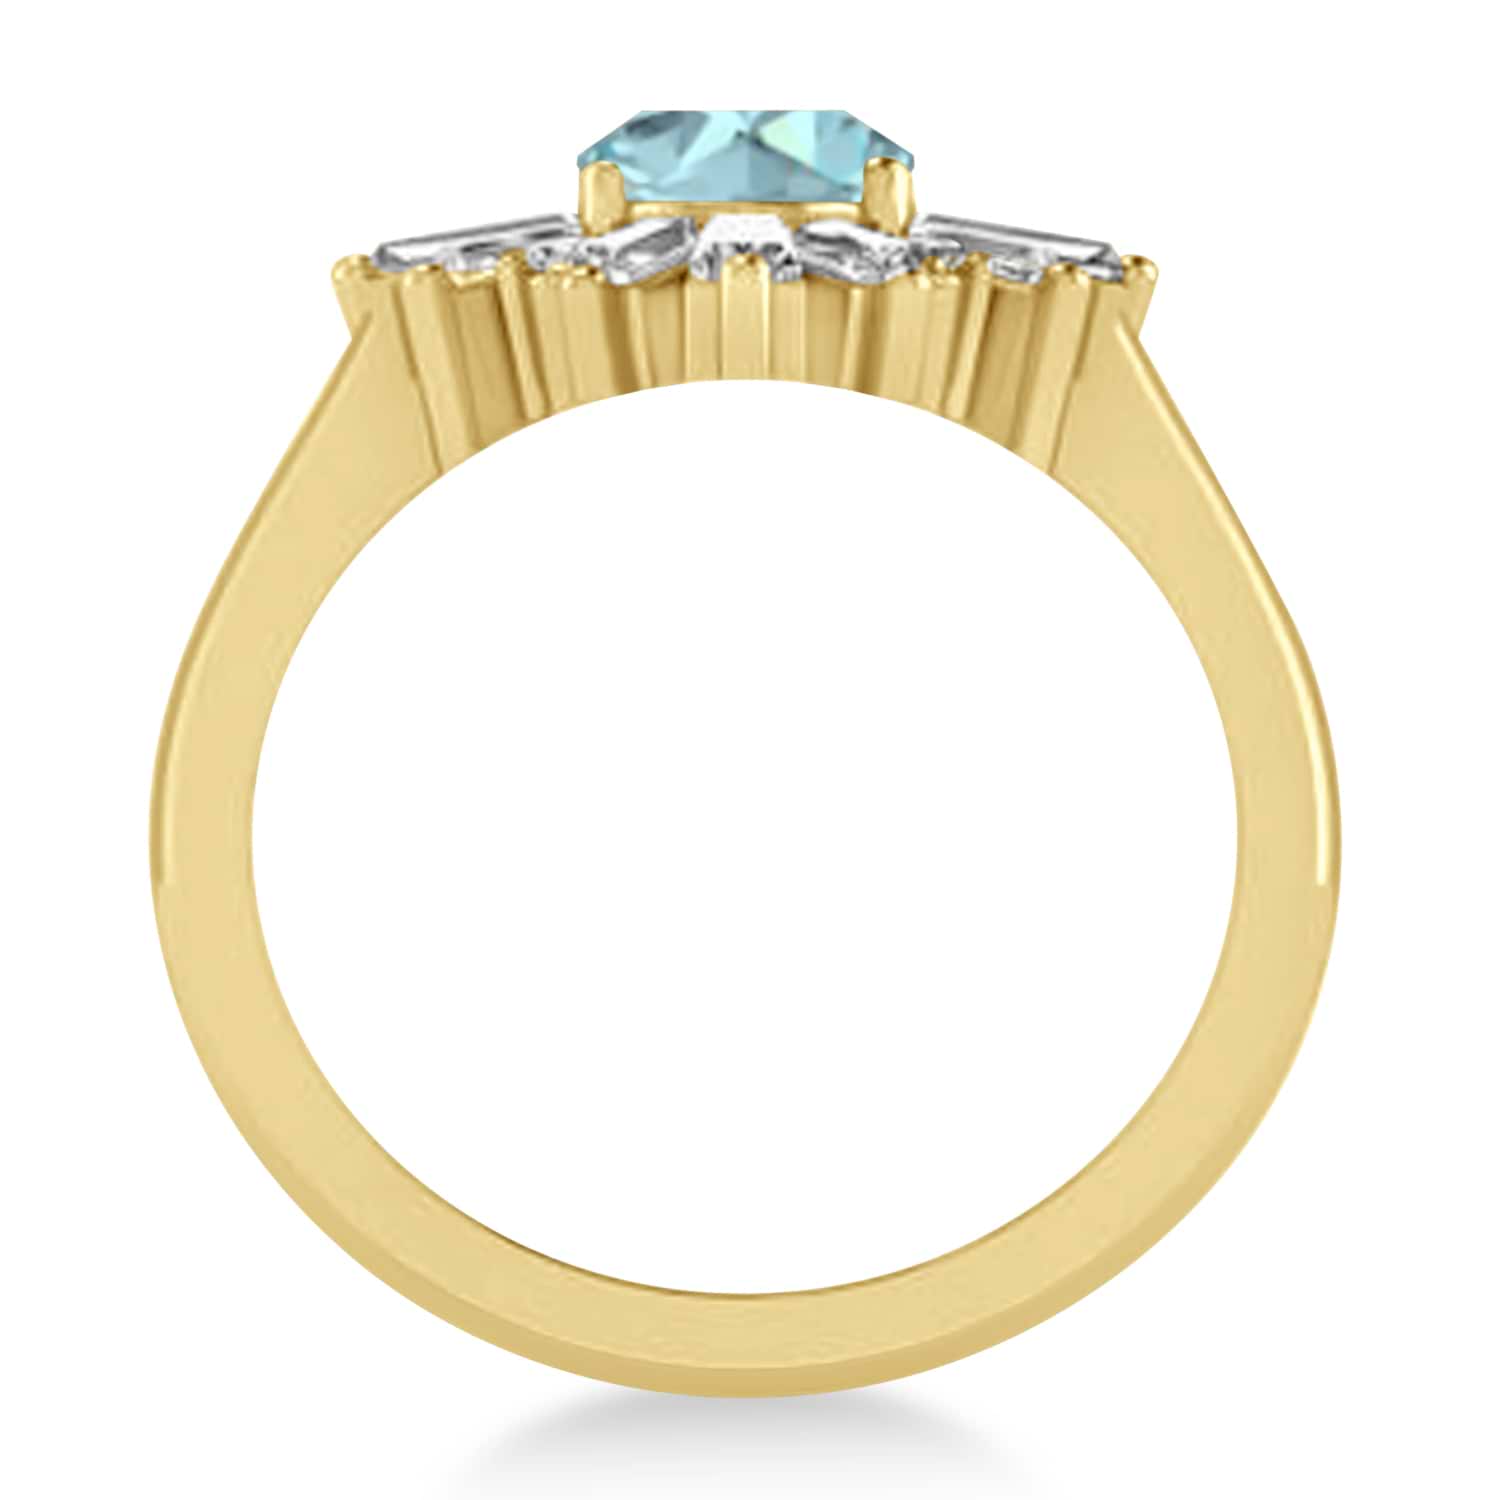 Aquamarine & Diamond Oval Cut Ballerina Engagement Ring 18k Yellow Gold (3.06 ctw)